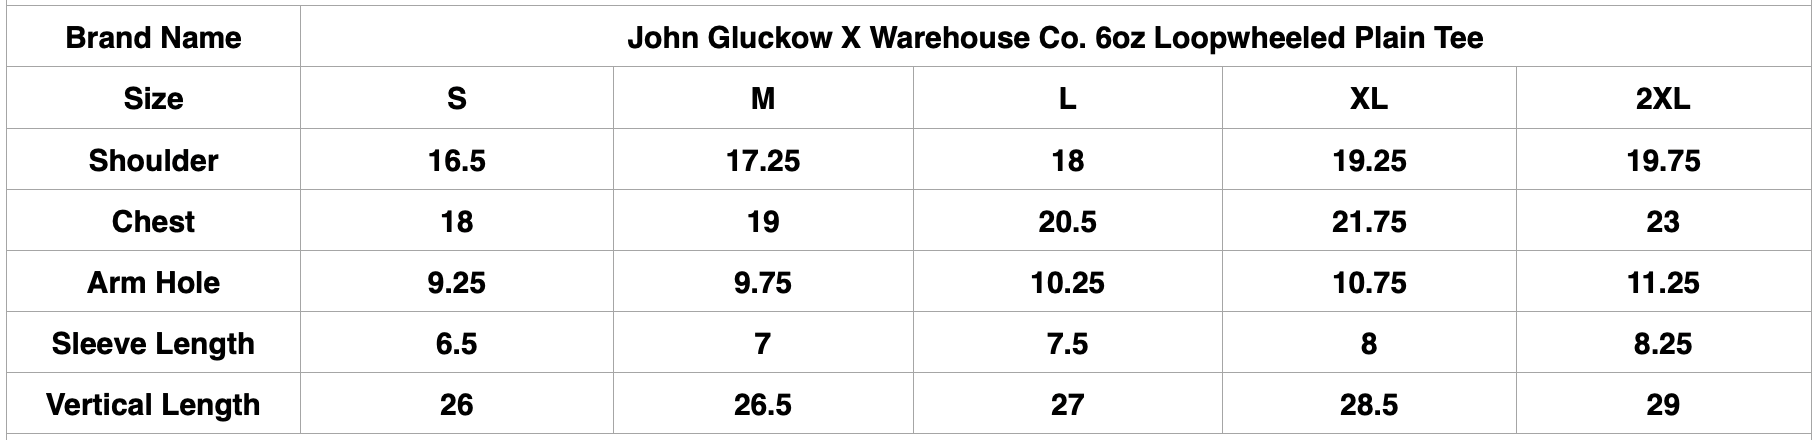 John Gluckow X Warehouse Co. 6oz Loopwheeled Plain Tee (Beige)